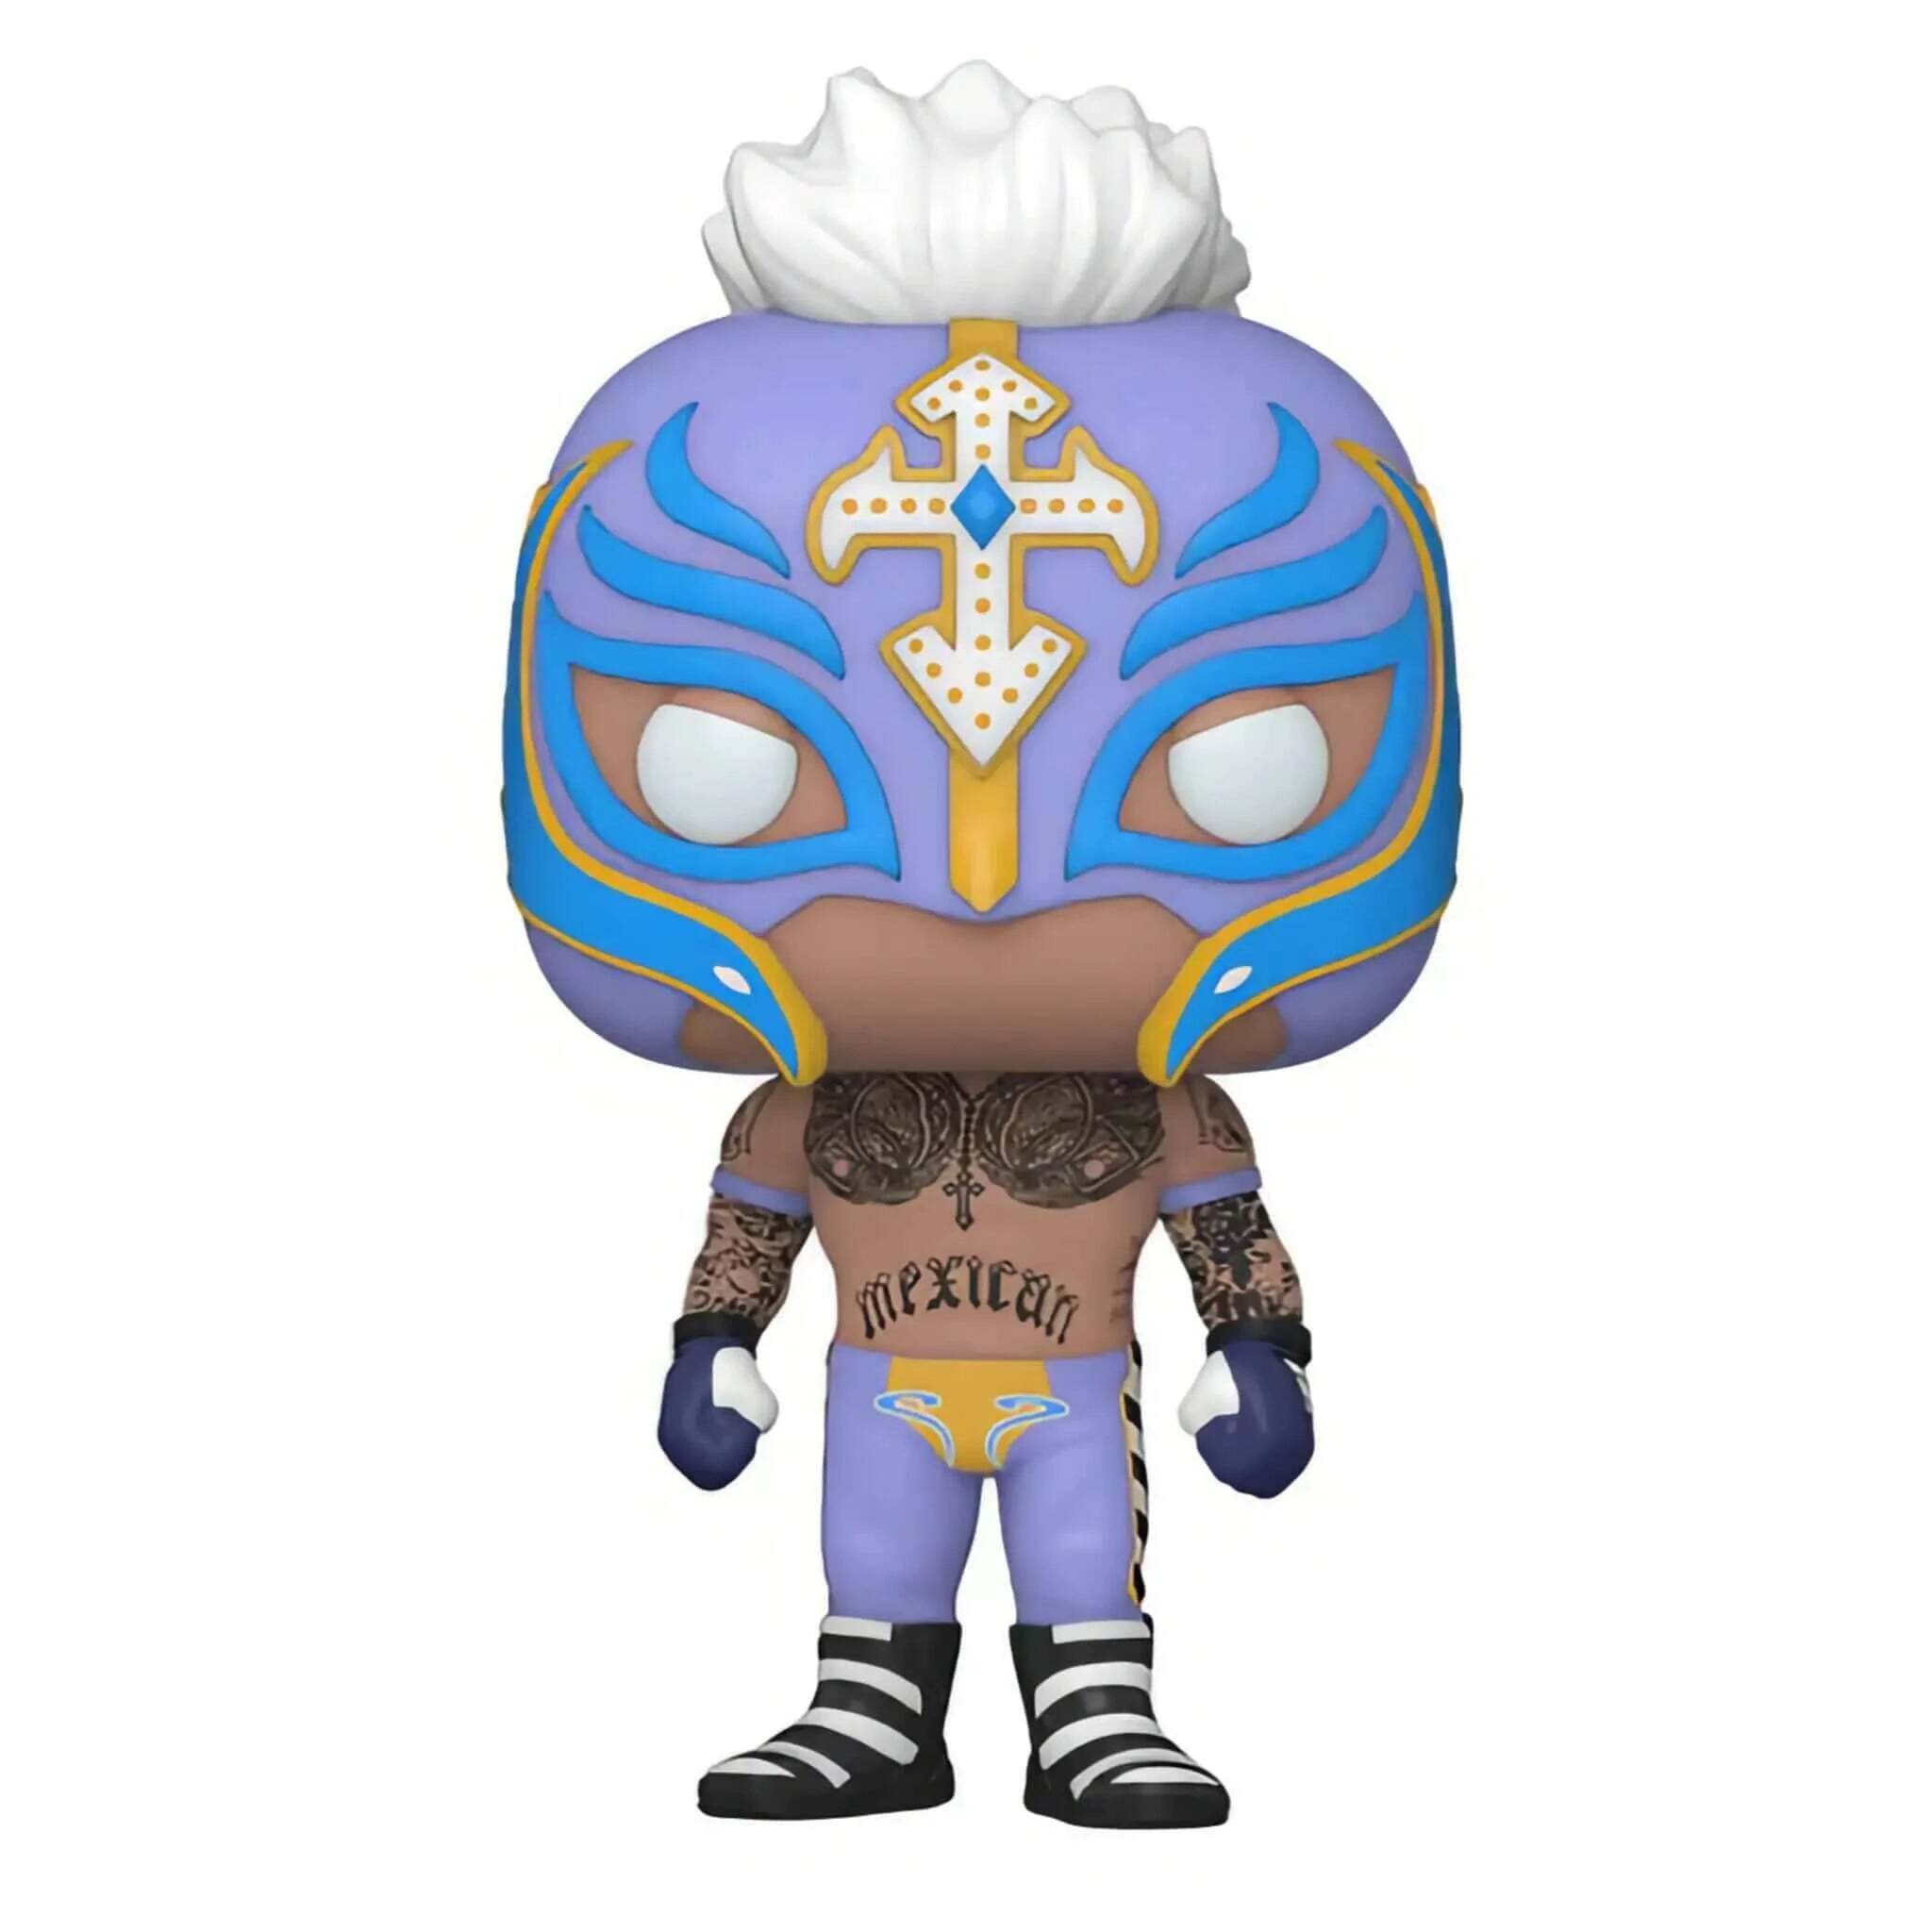 Rey Mysterio (GITD) Funko Pop! AMZN EXCLUSIVE